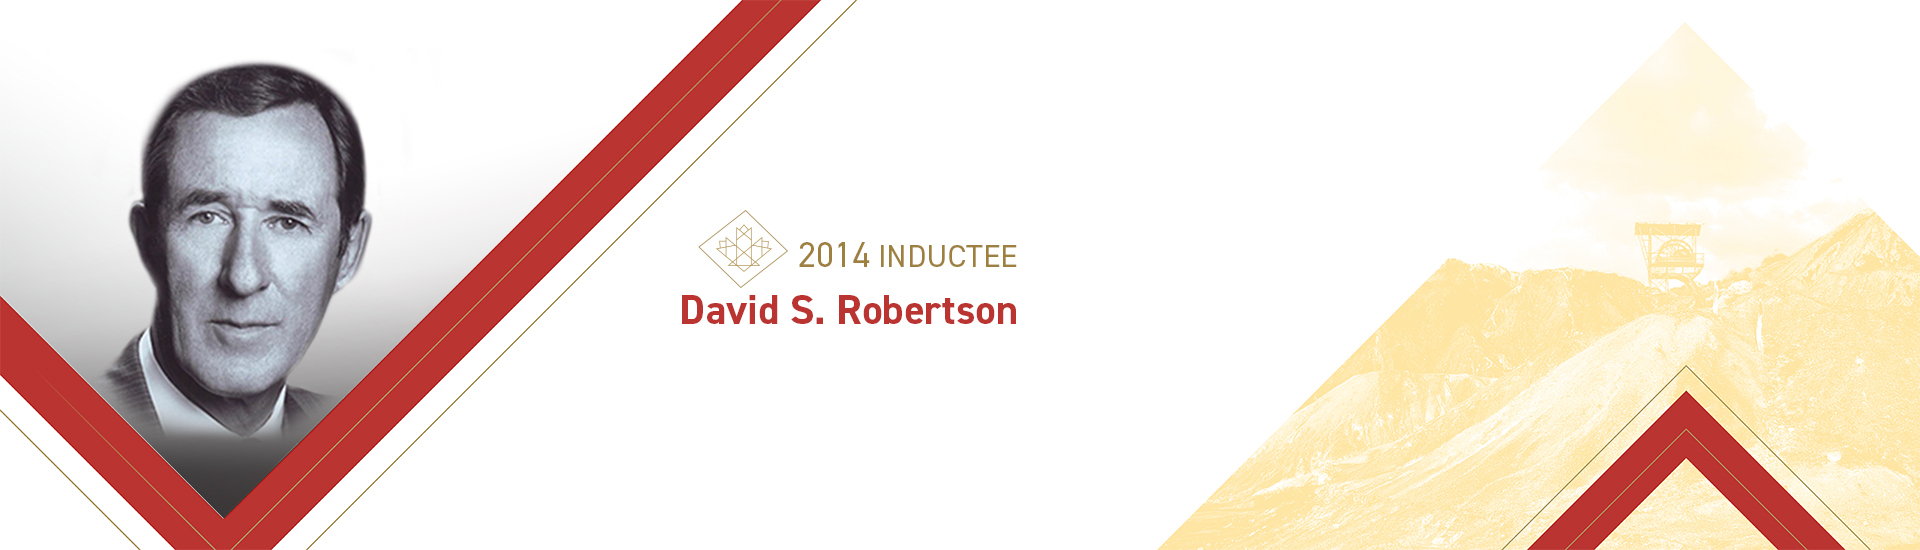 David S. Robertson 